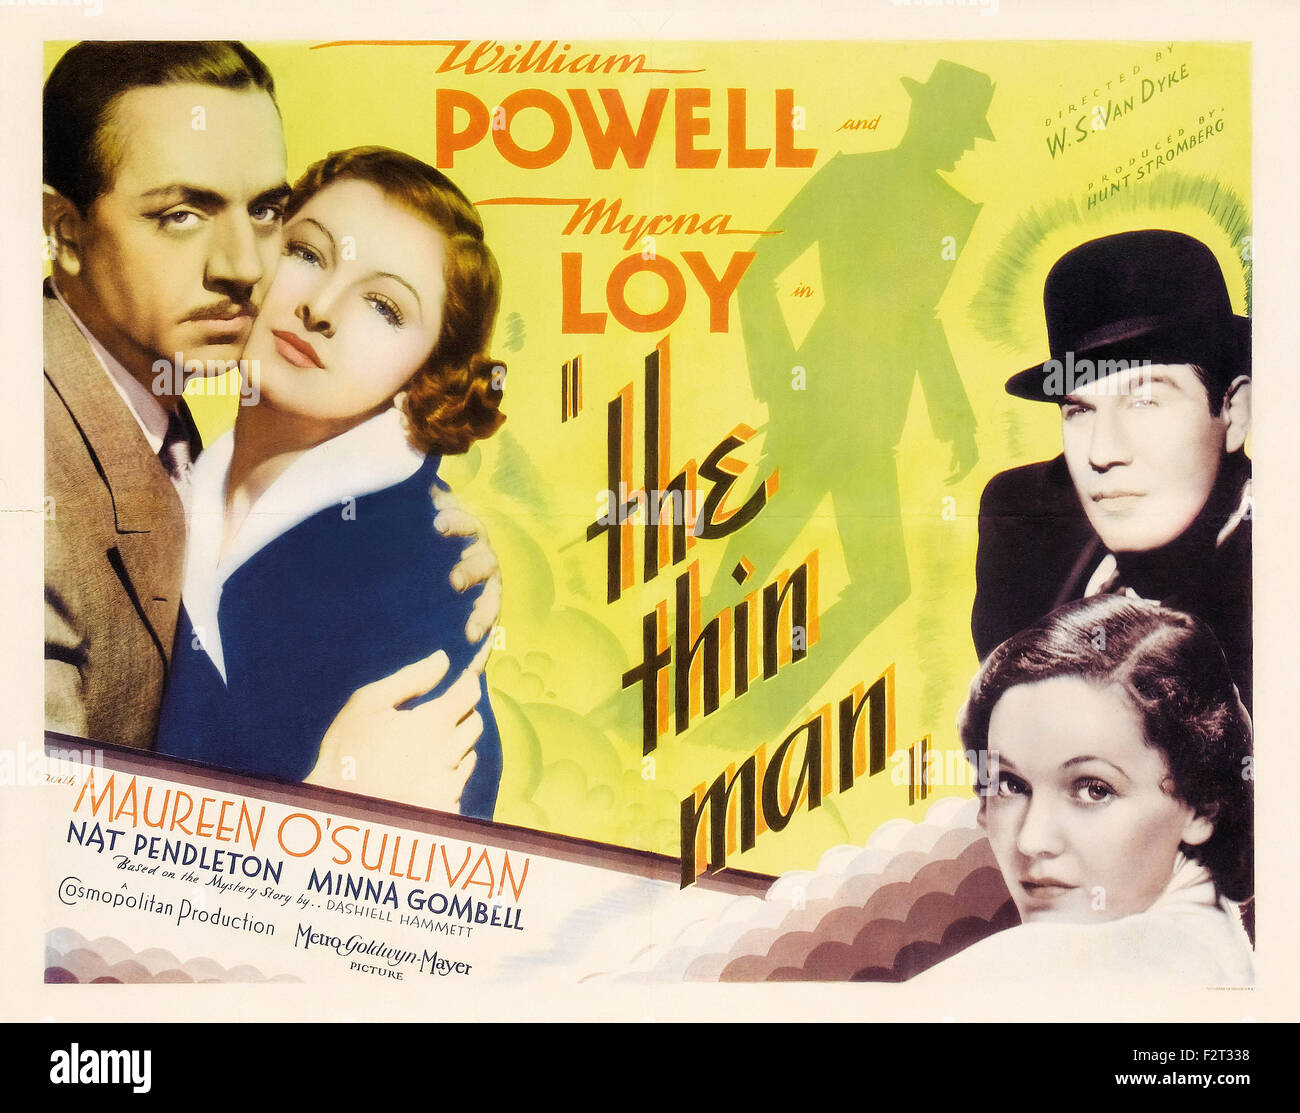 Thin Man, The - Movie Poster Stock Photo